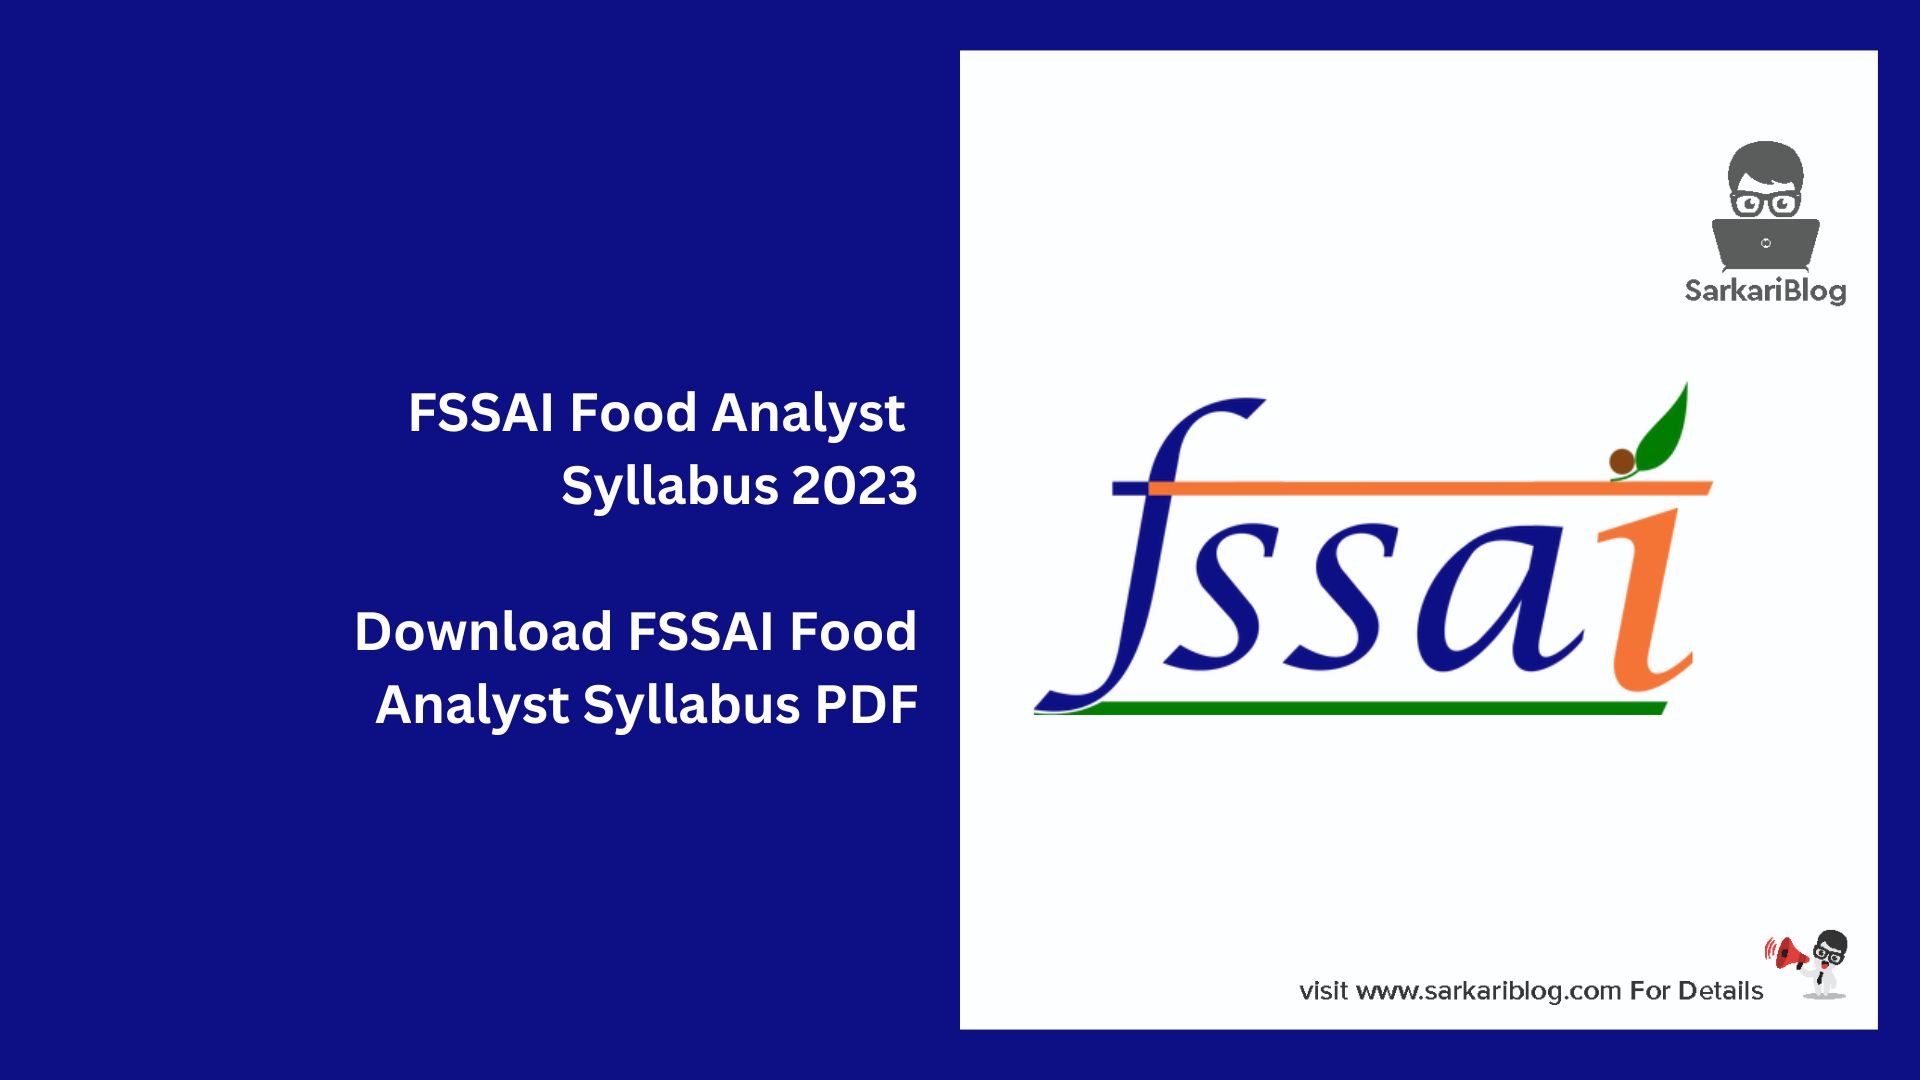 FSSAI Food Analyst Syllabus 2023